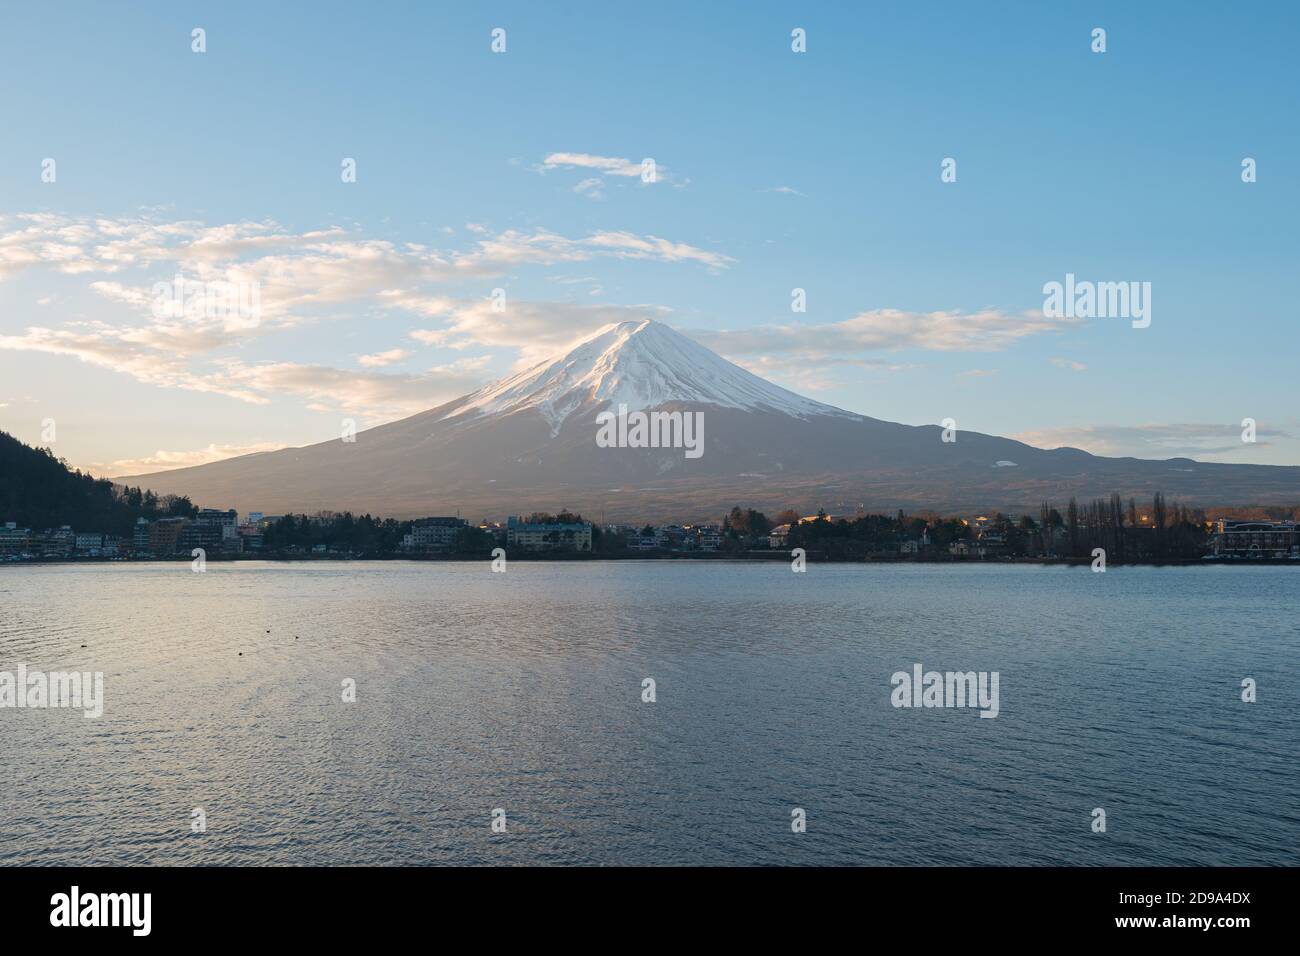 Fujisan Mountain with view of lake Kawagushiko in Japan. Stock Photo